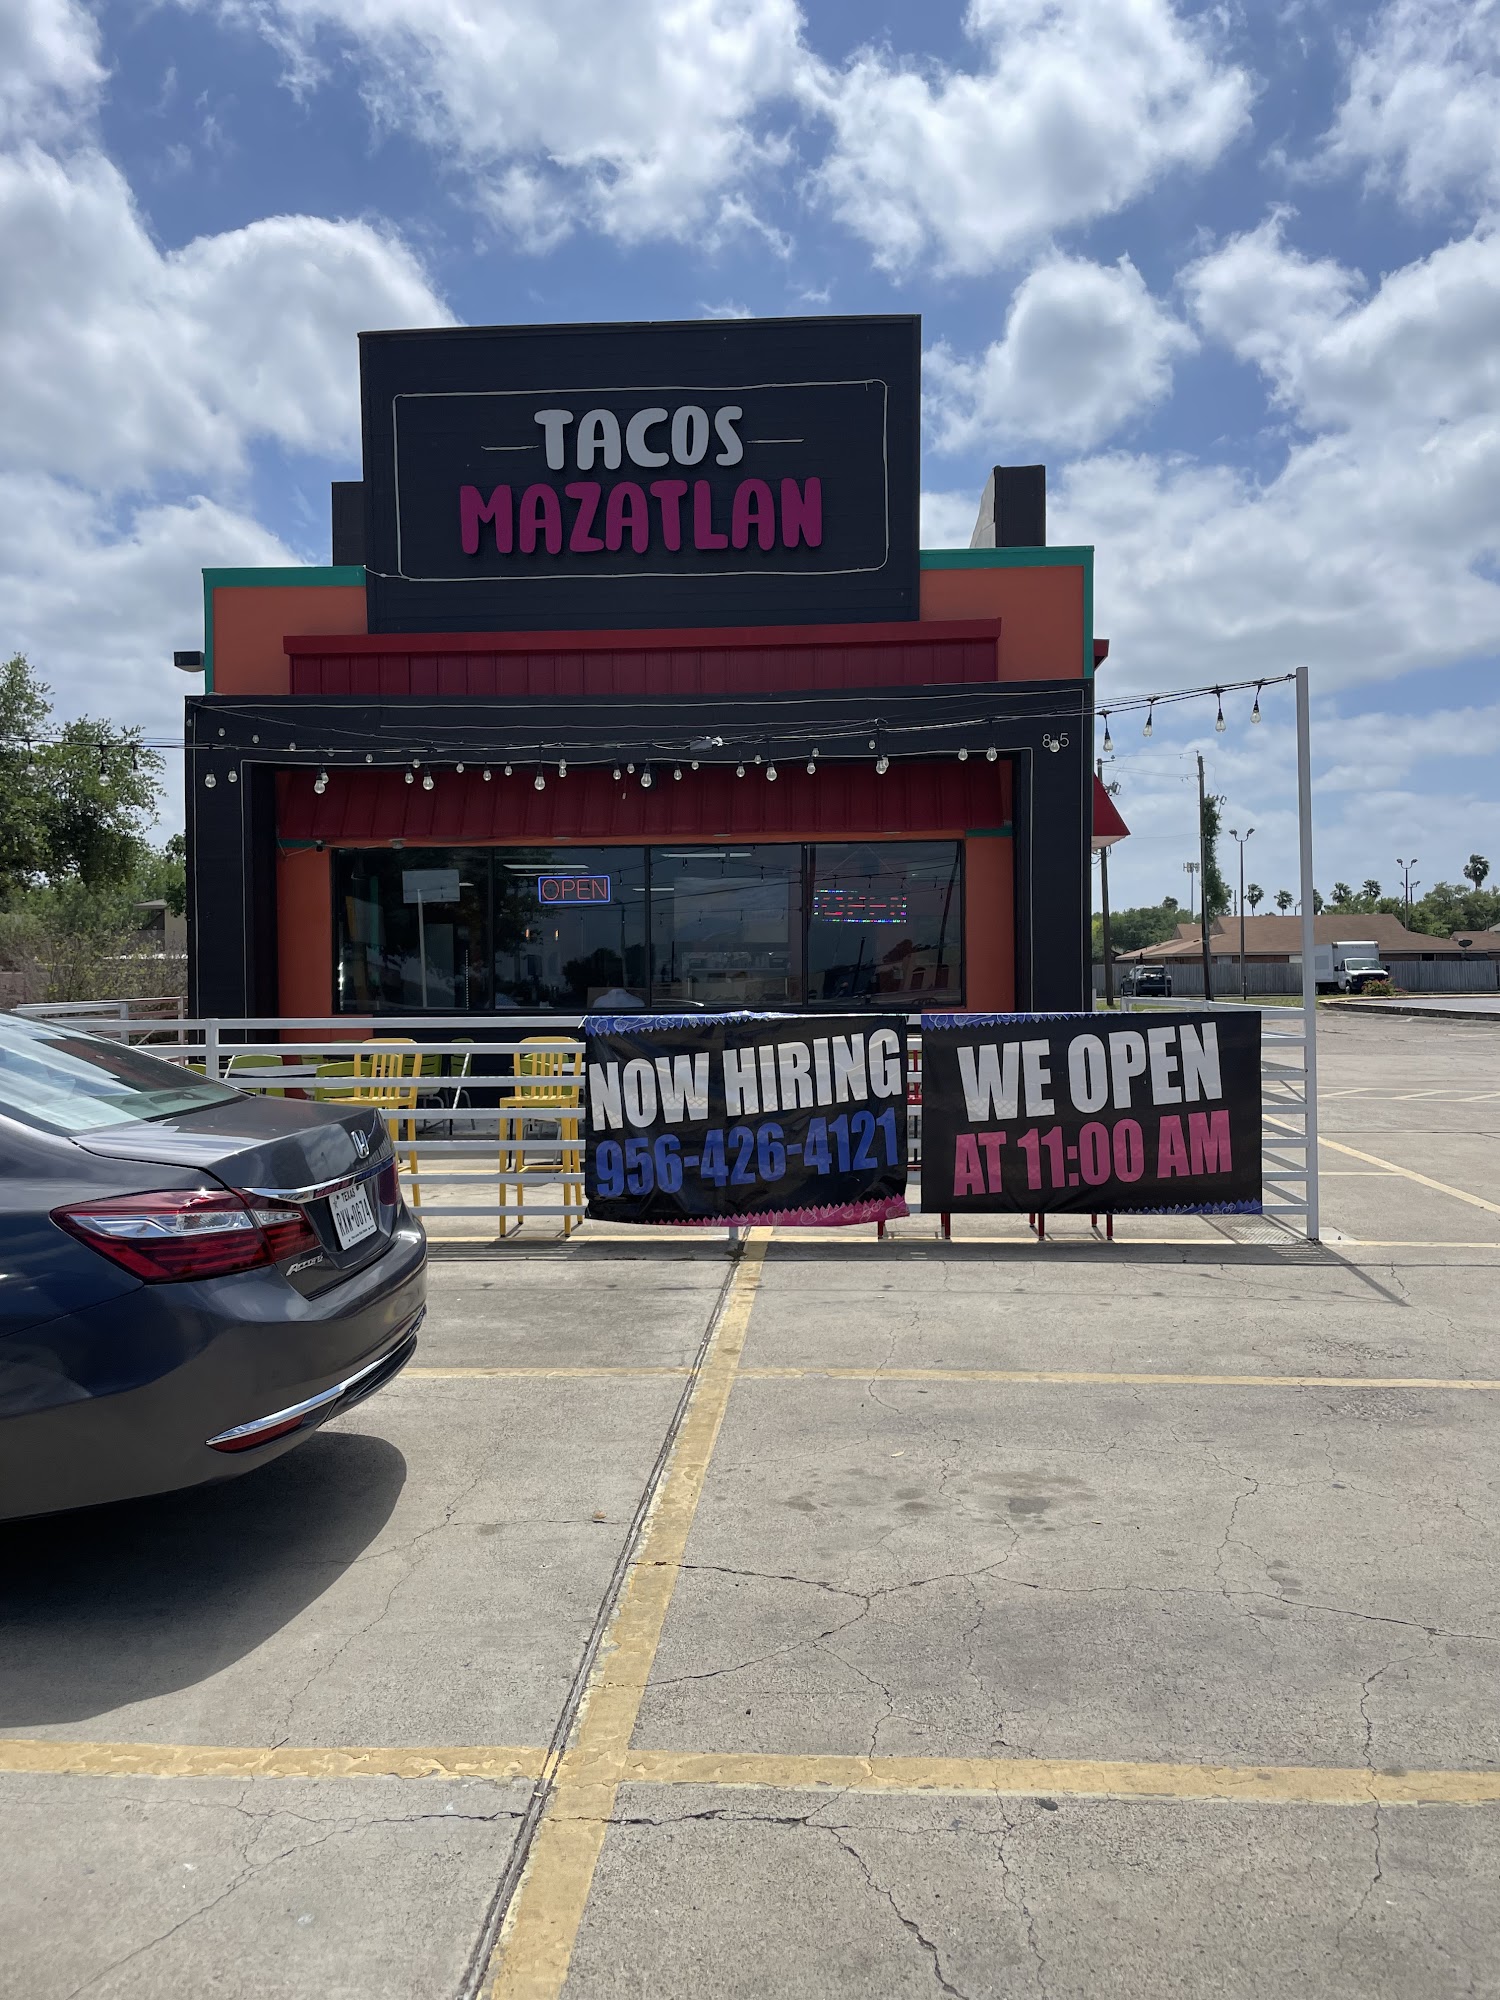 Tacos MAZATLAN